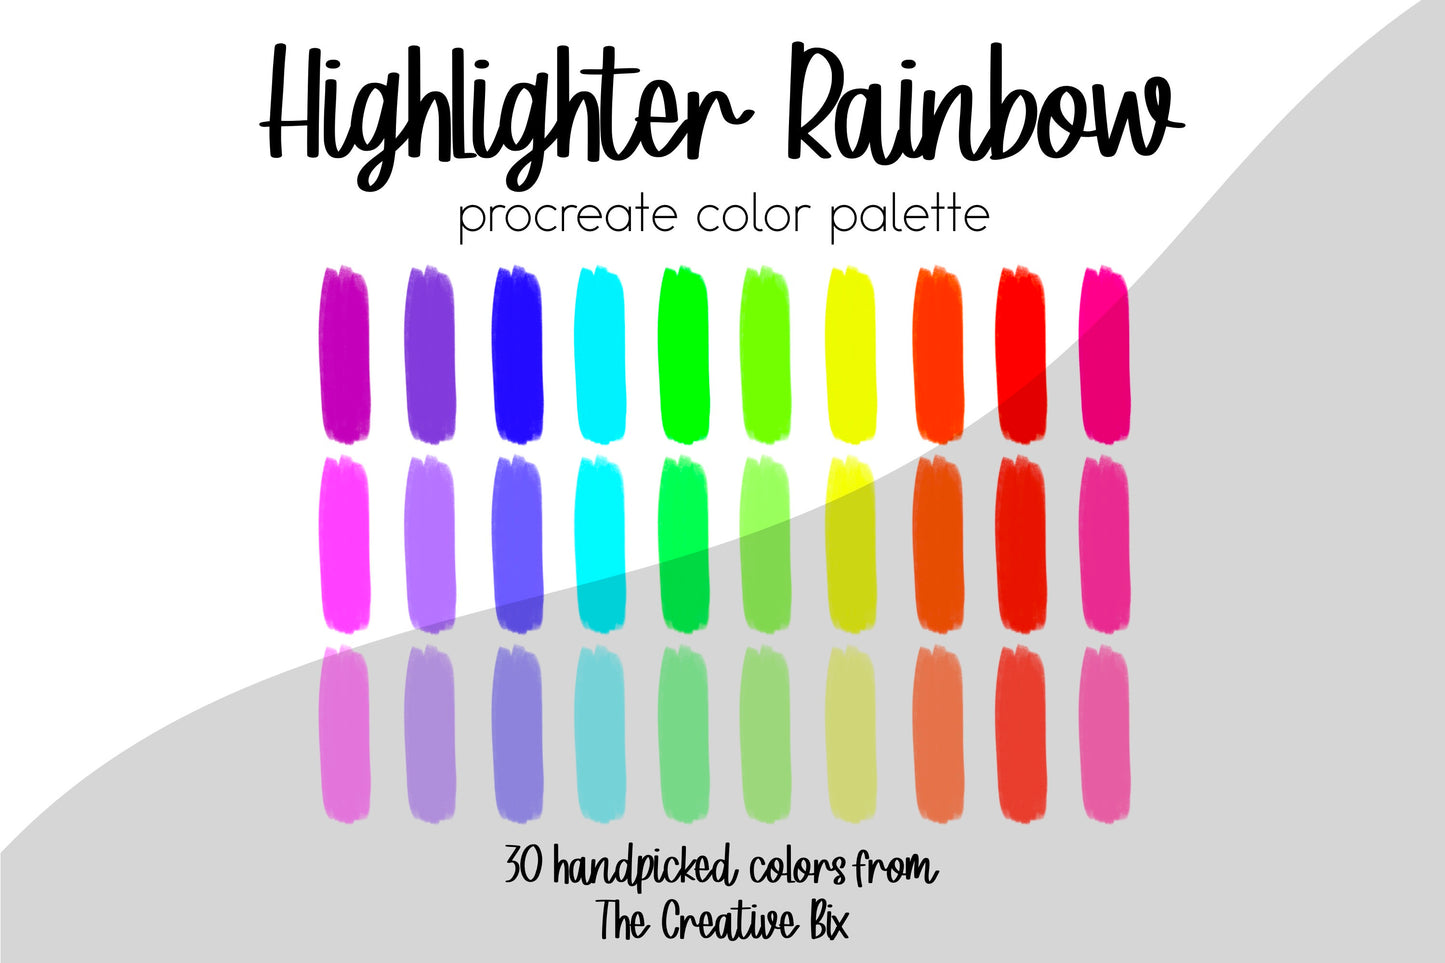 Highlighter Rainbow Procreate Palette